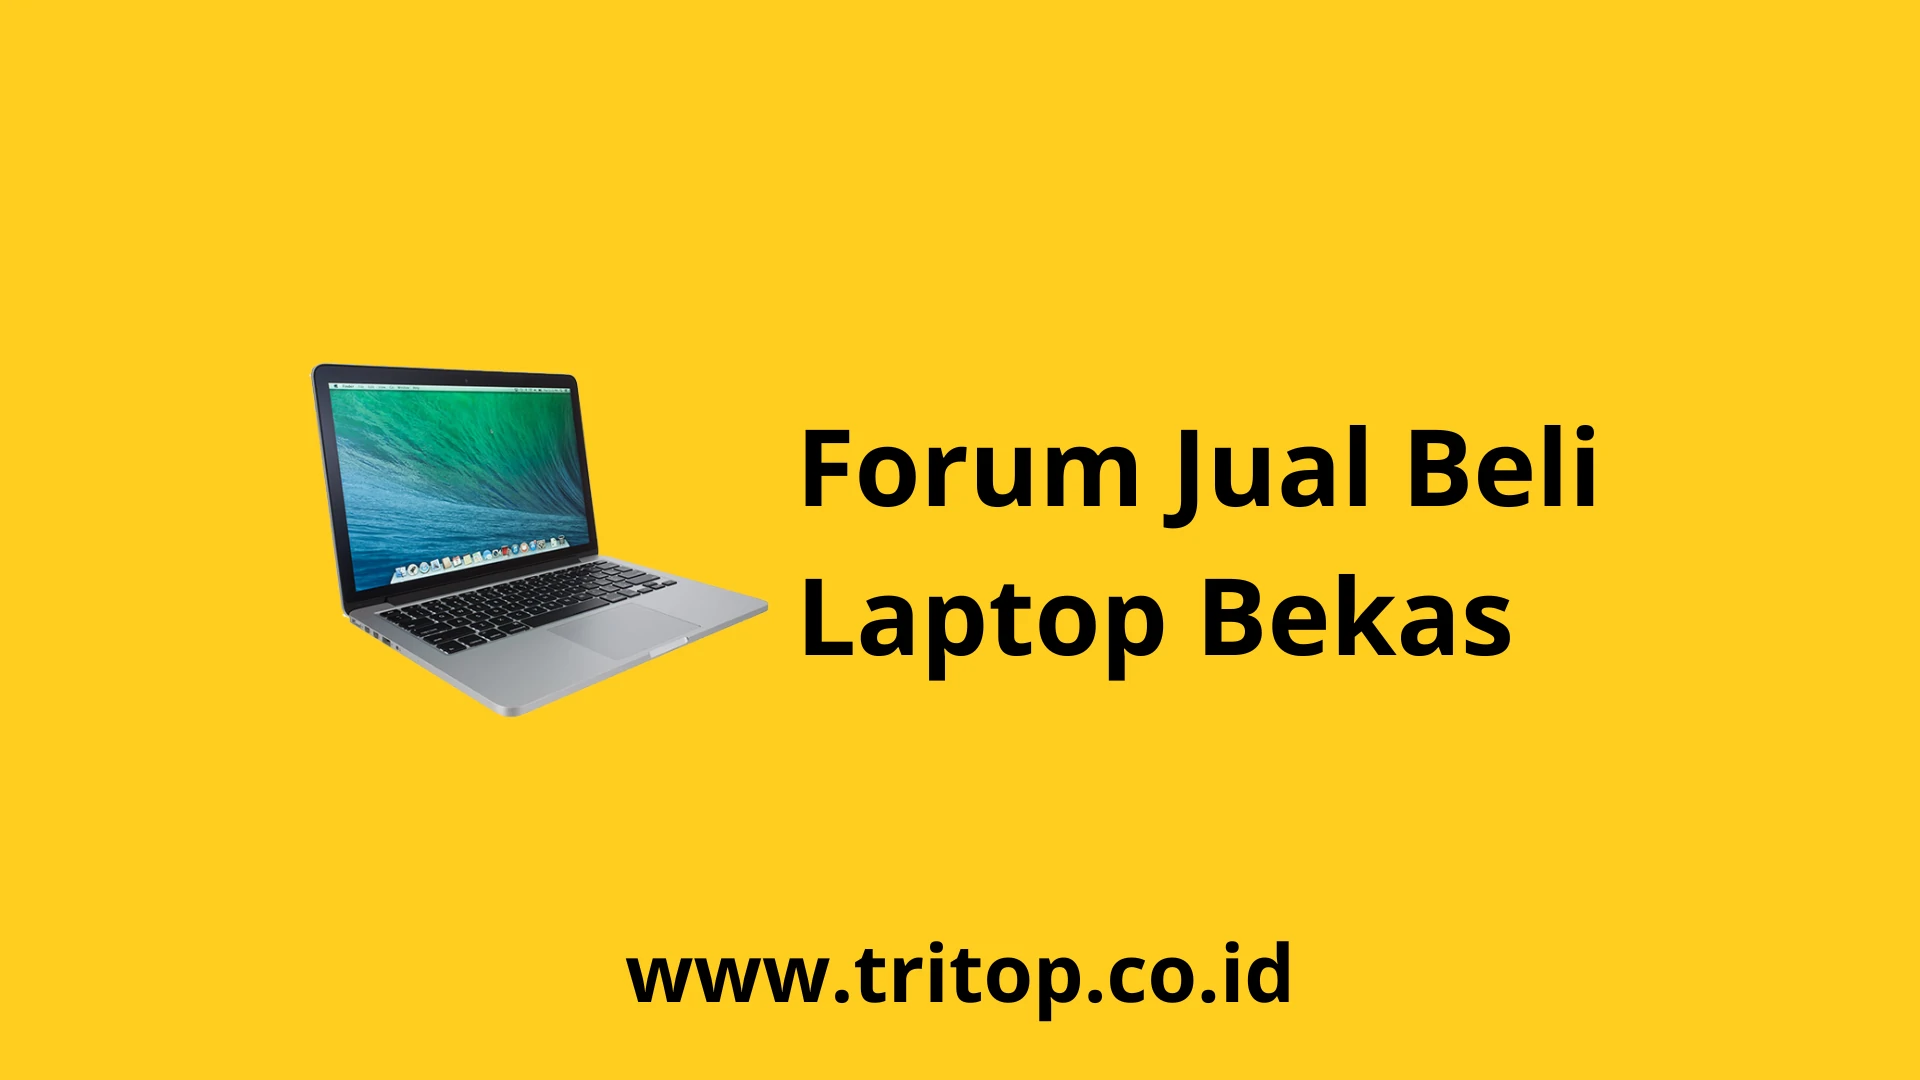 Forum Jual Beli Laptop Bekas Tritop.co.id